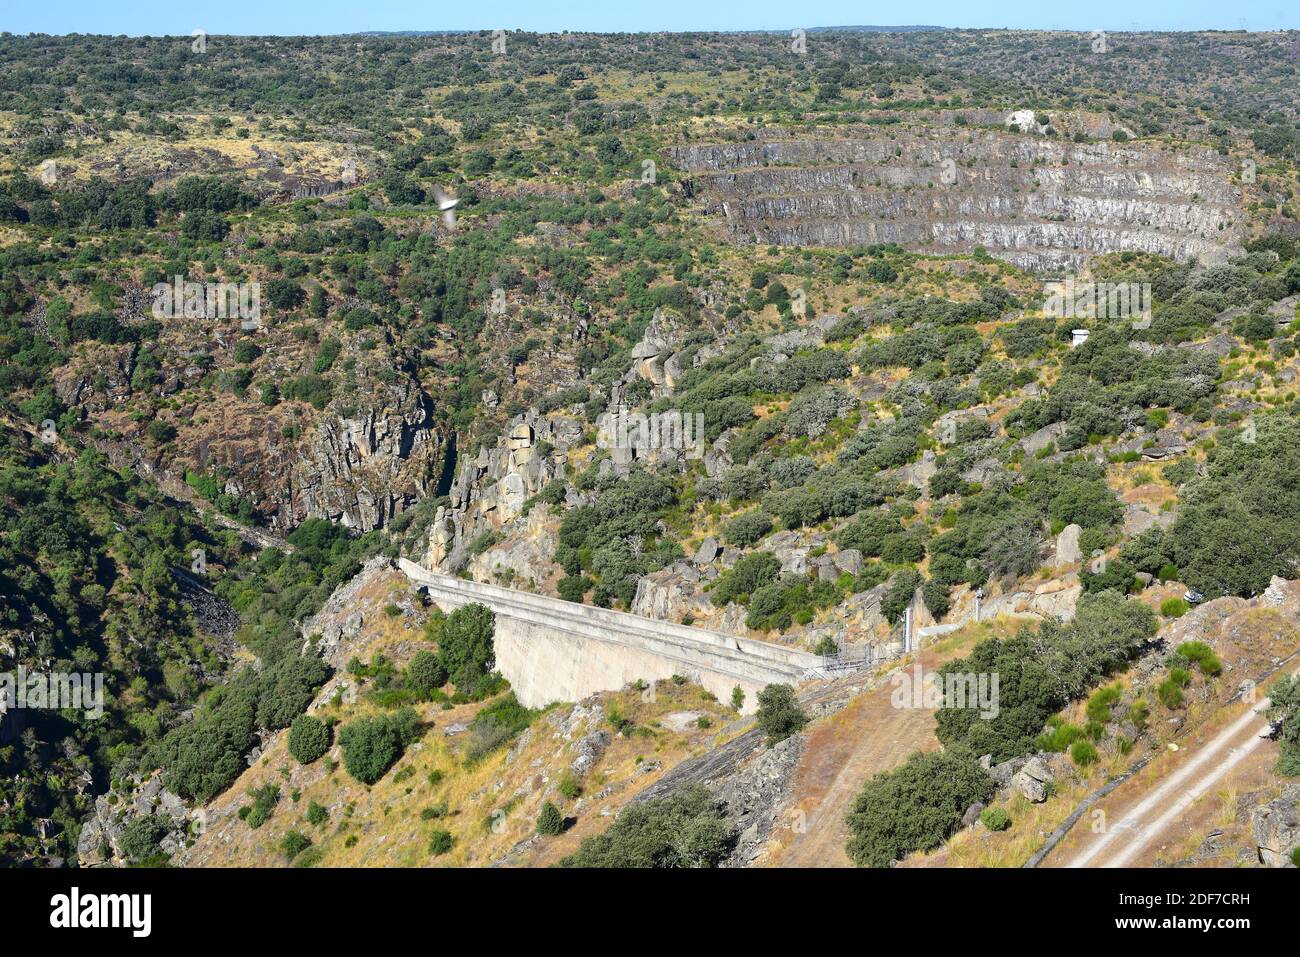 Almendra dam, spillway and quarry. Salamanca province, Castilla y Leon, Spain. Stock Photo